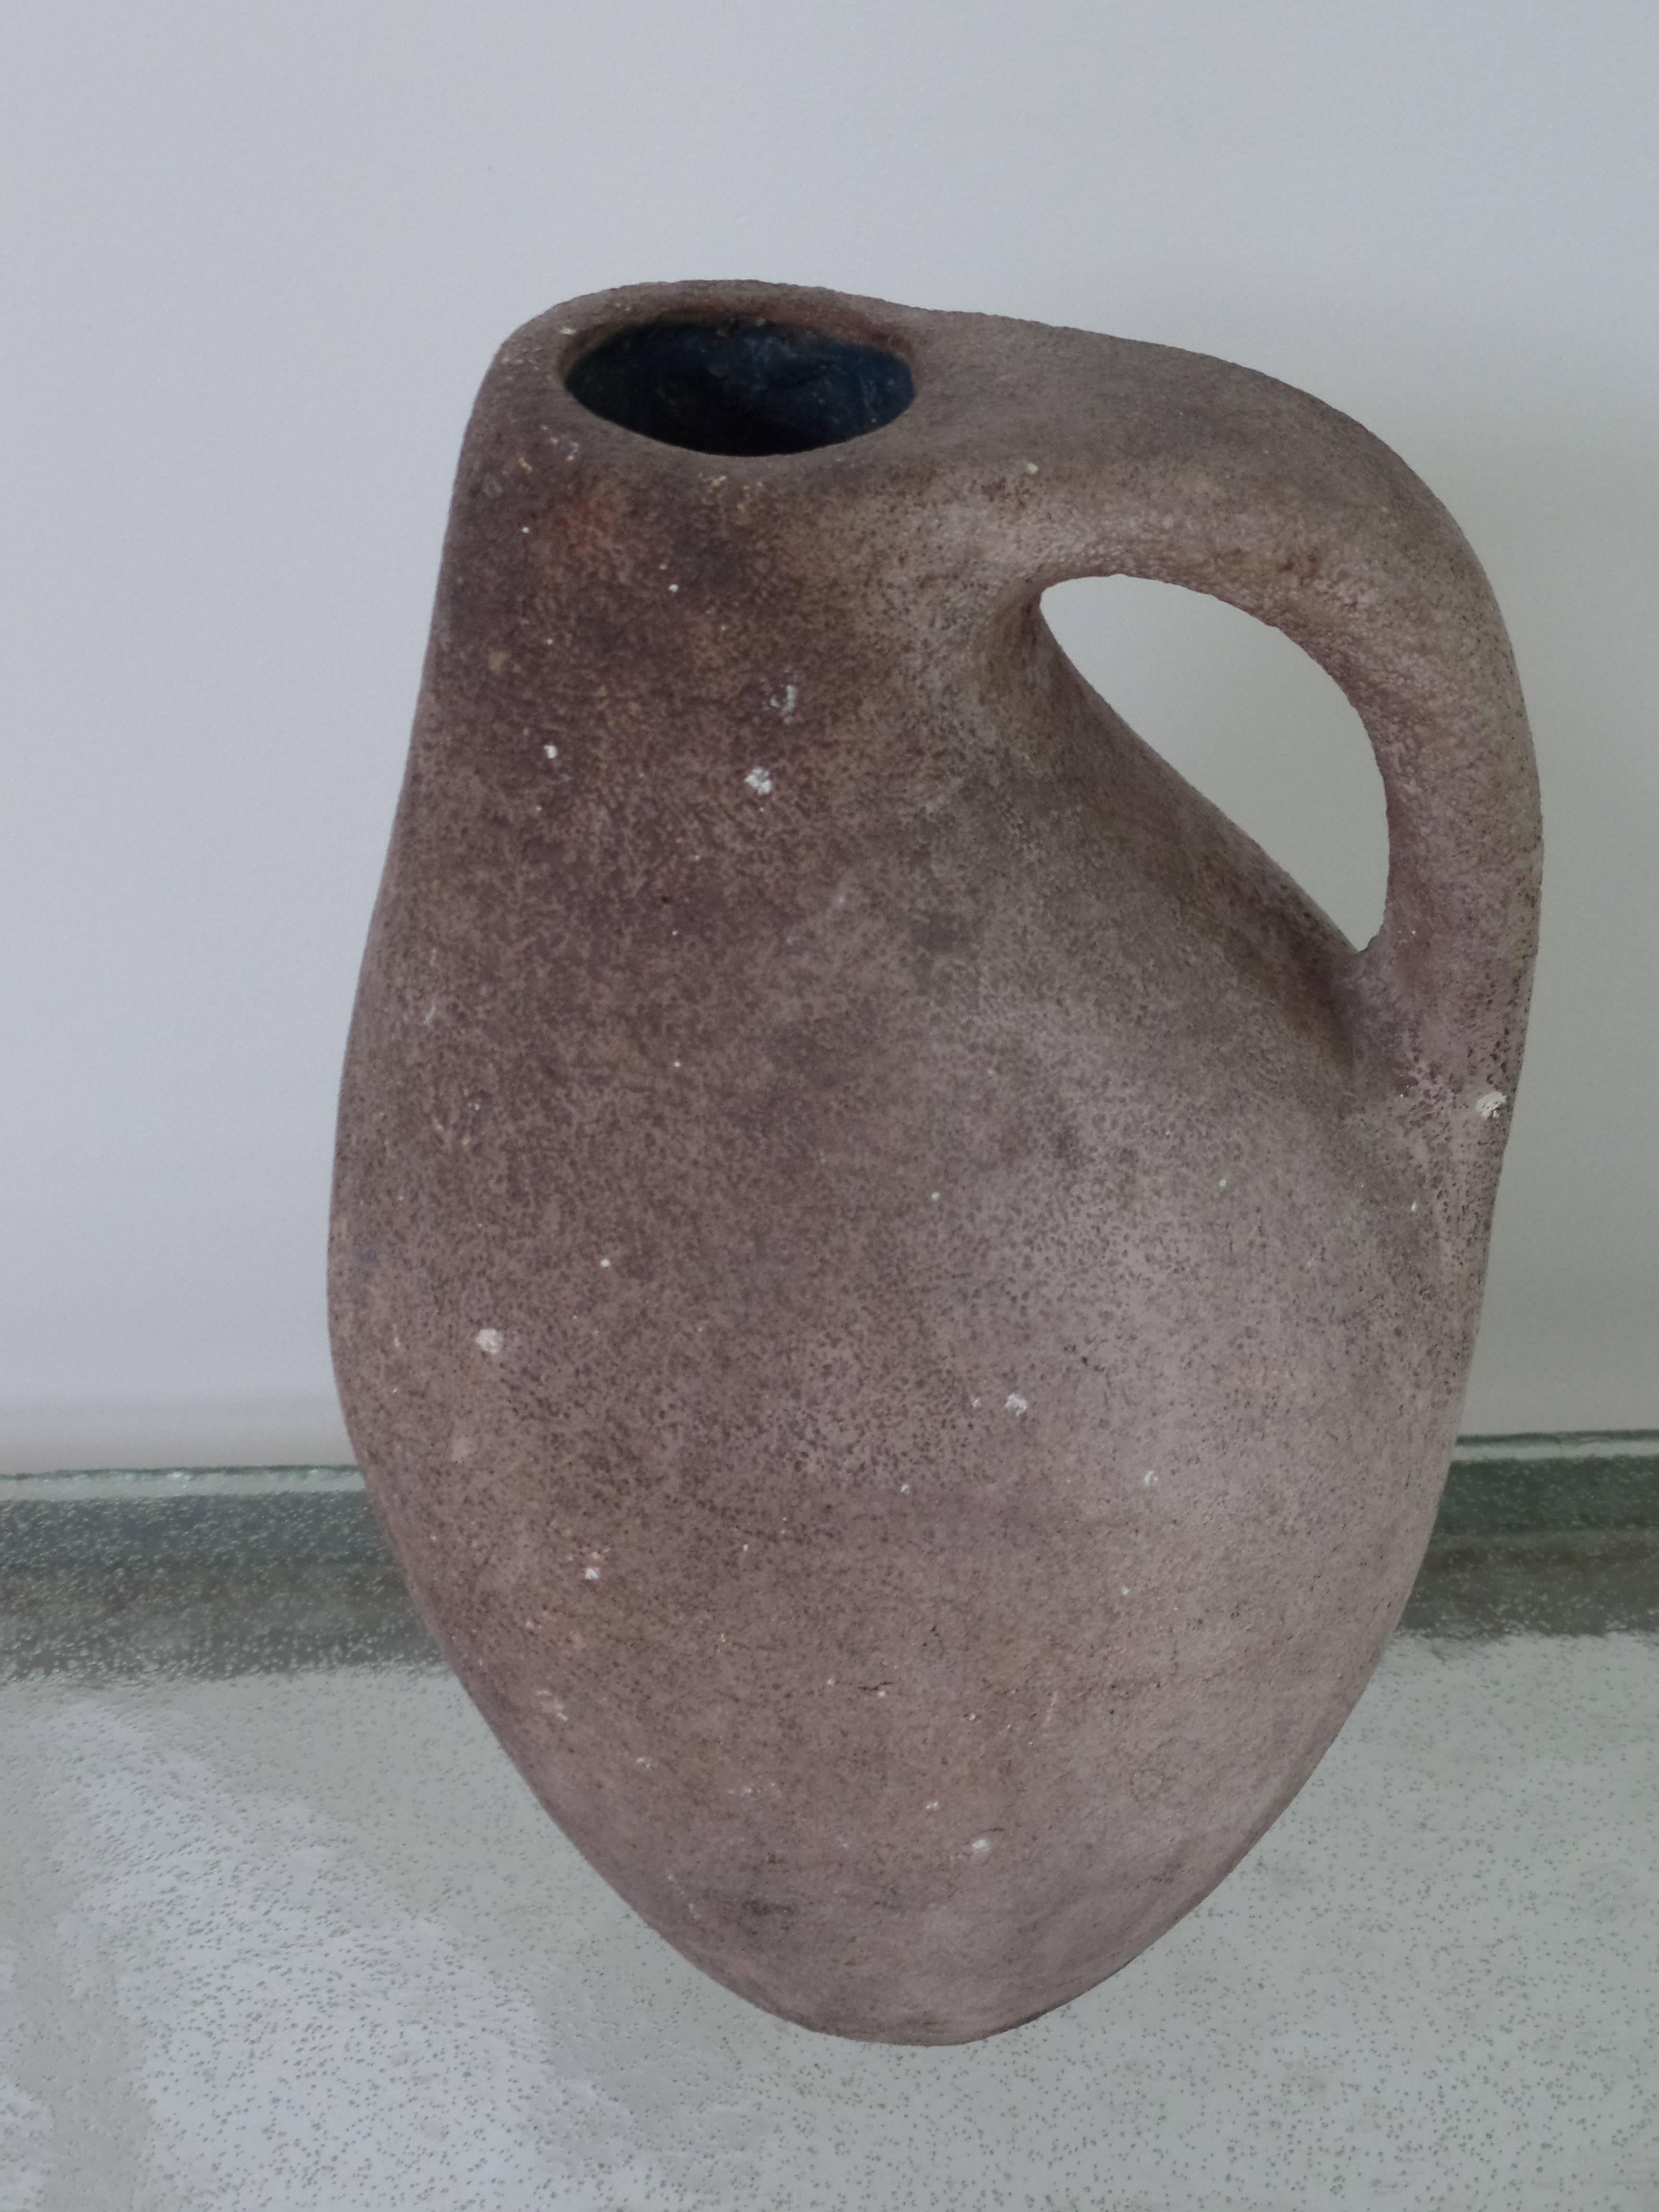 Elegant French Mid-Century Modernist / Art Deco ceramic amphora / pitcher / vase.

Signed on bottom.